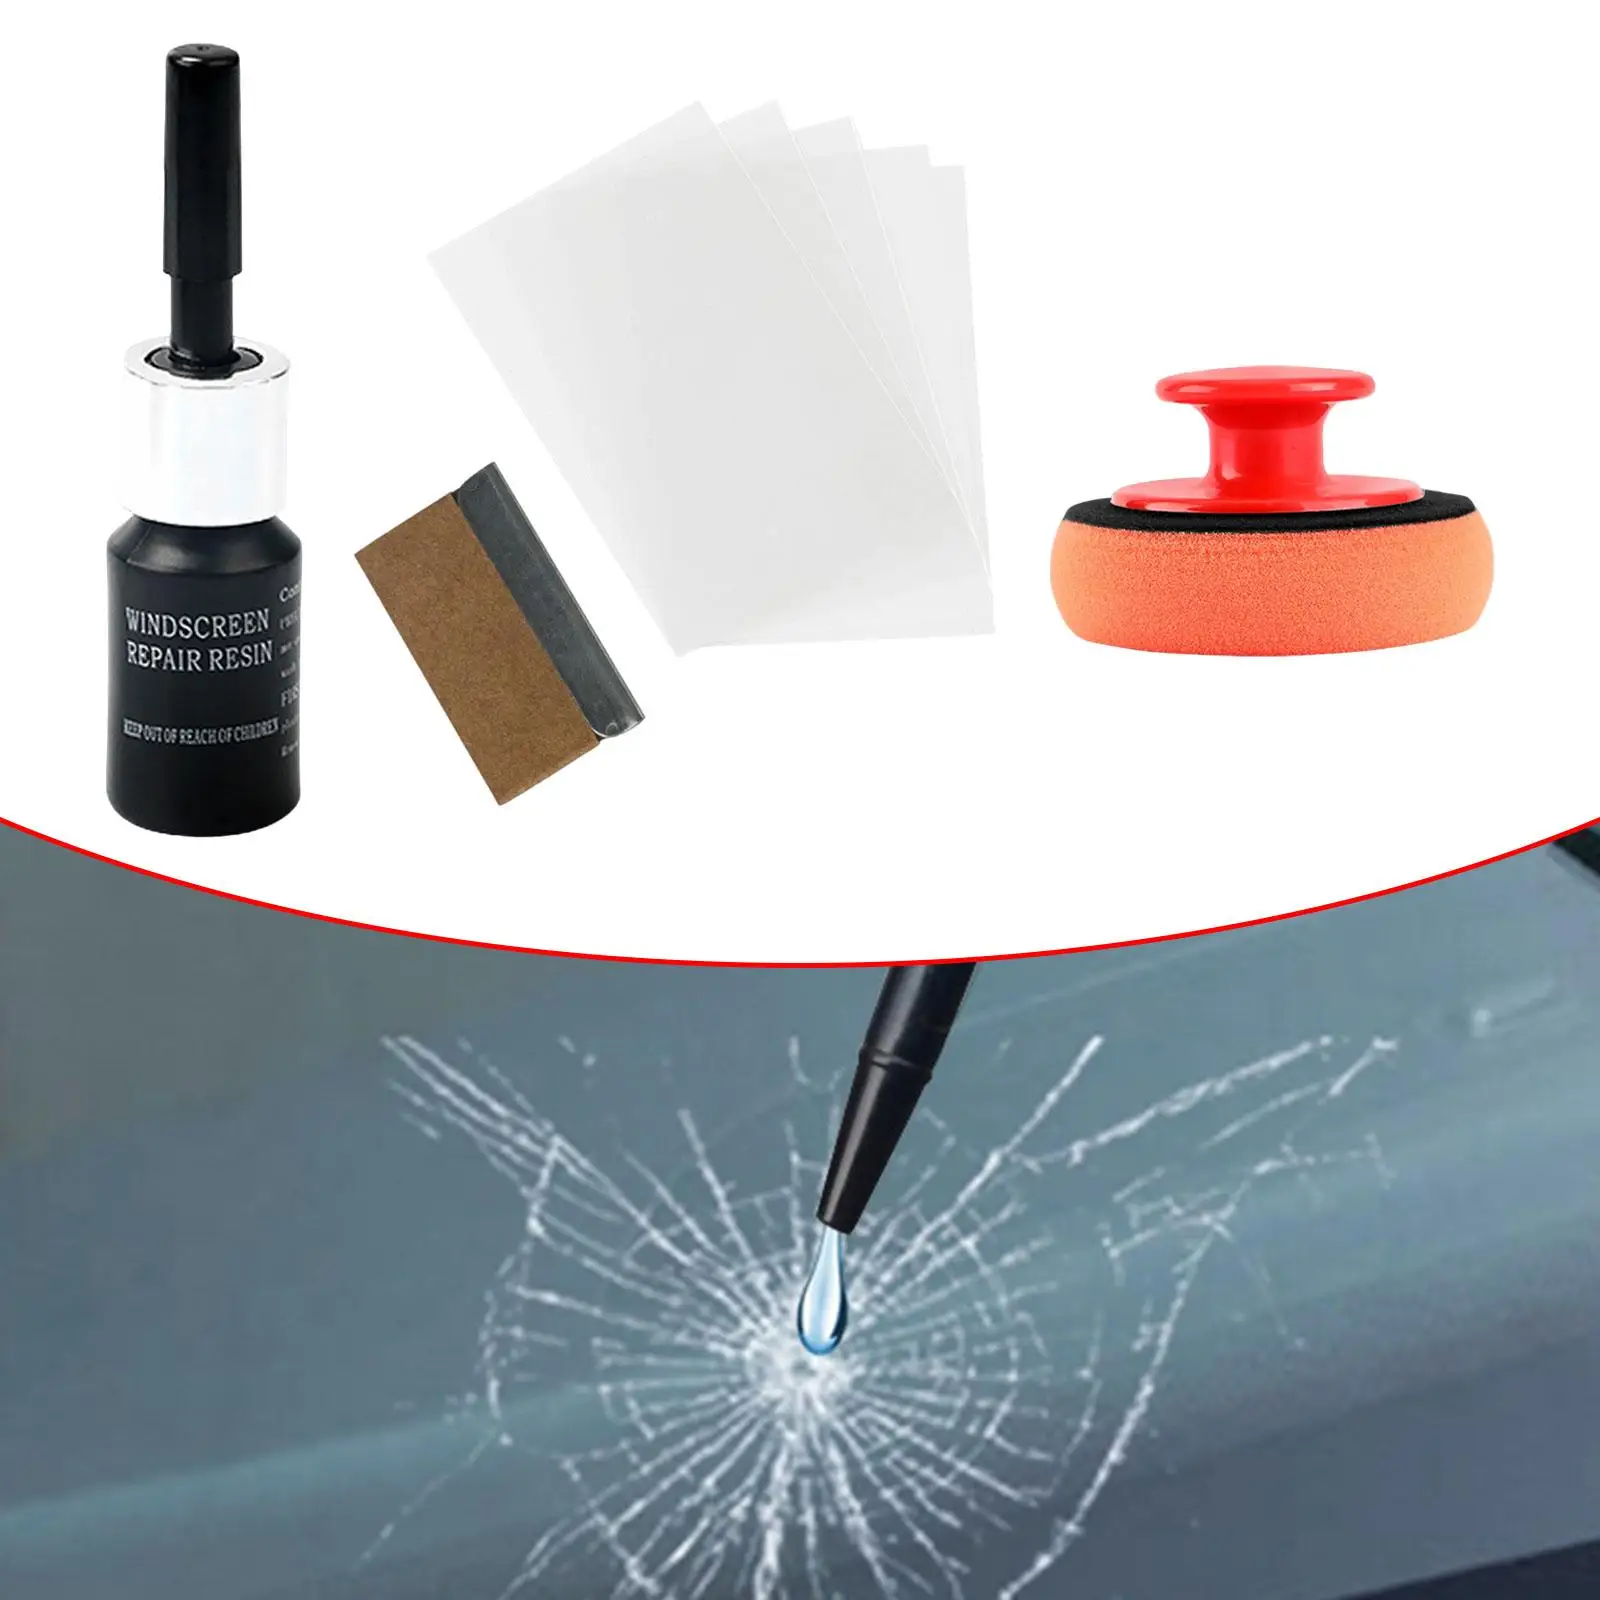 Car Windshield Crack Repair Kit Accessories Quick Fix Glass Repair Fluid for Fixing Chips Scratch Star Shaped Crack Cracks